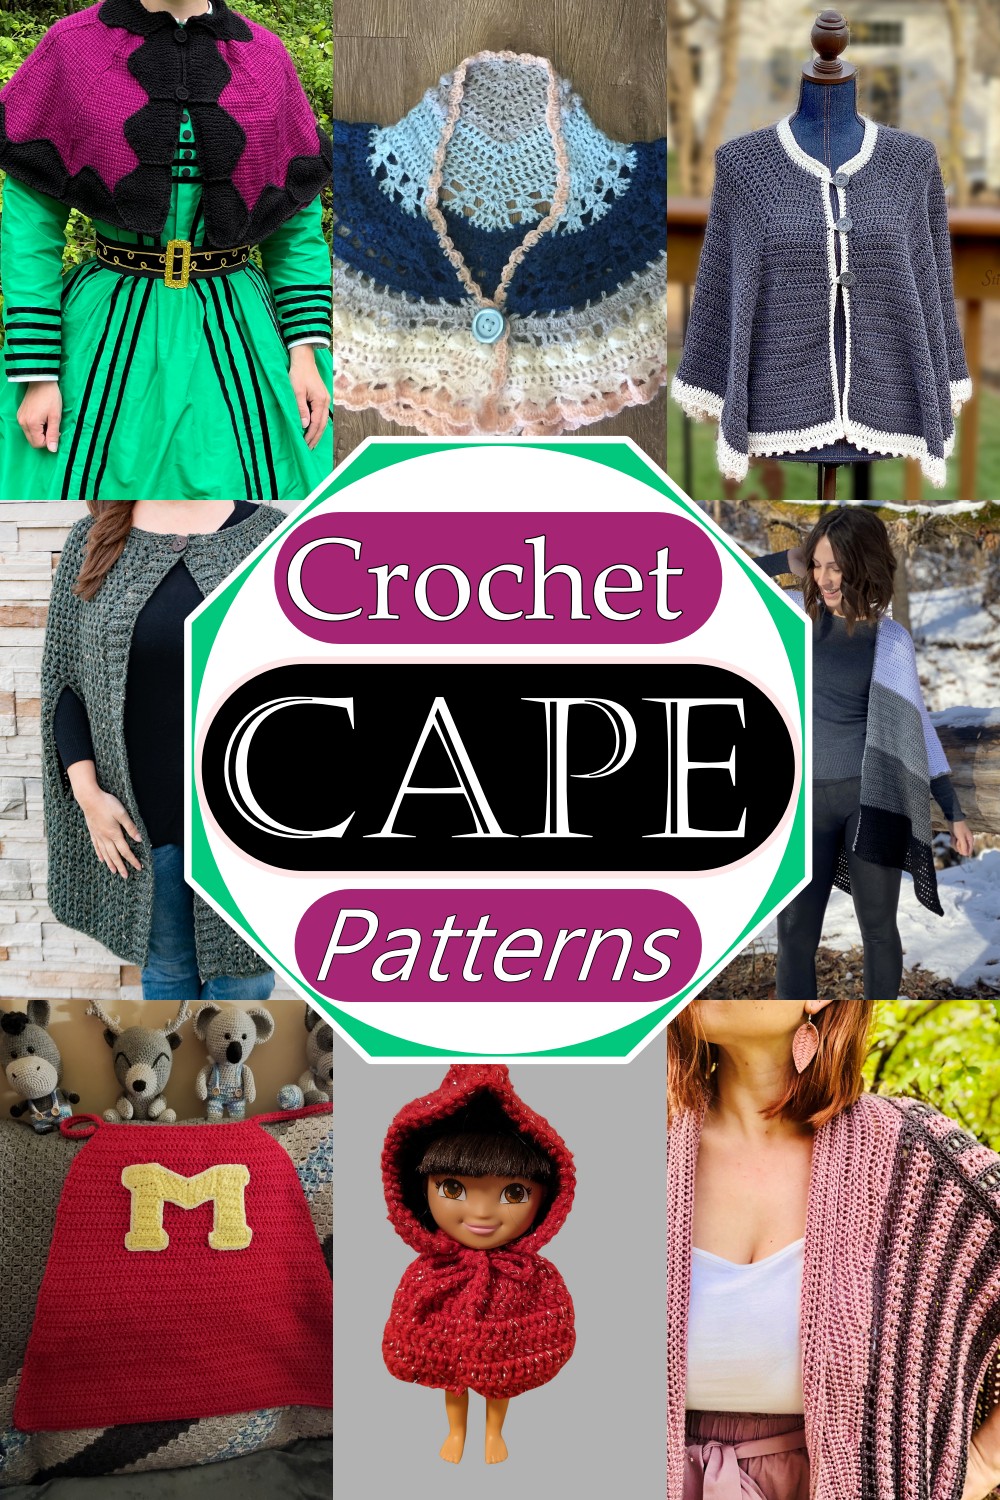 Crochet Cape Patterns